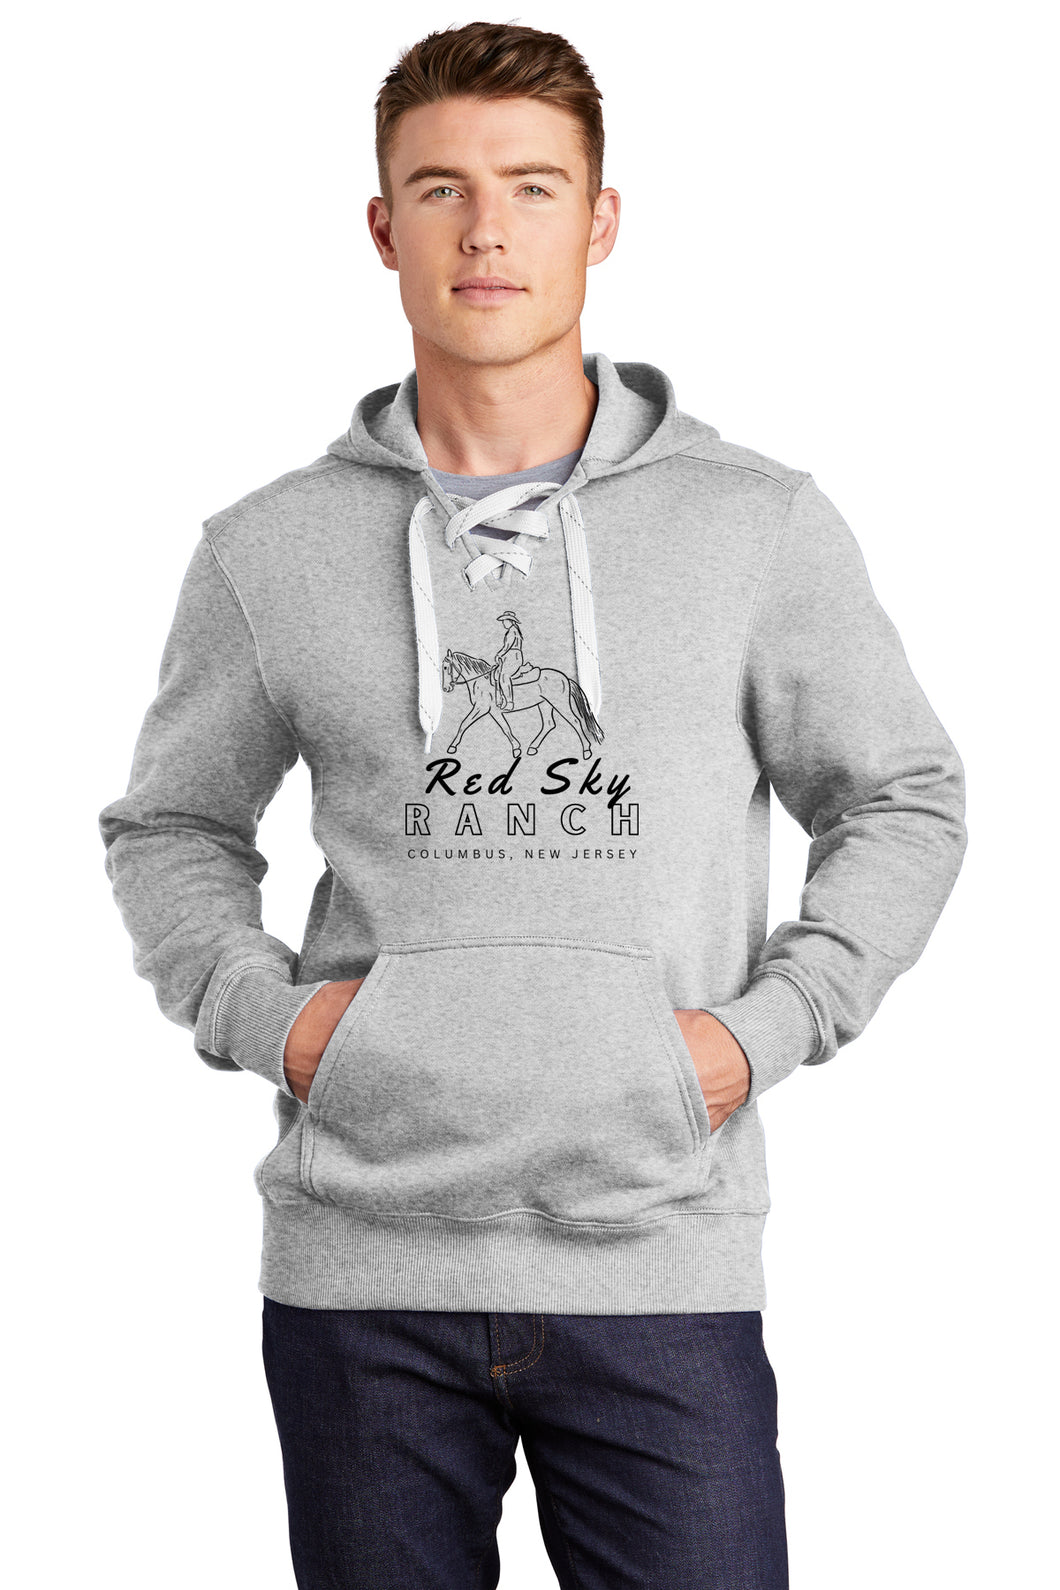 Red Sky Ranch- OUTLINE LOGO- Sport Tek- Lace Up Pullover Hooded Sweatshirt